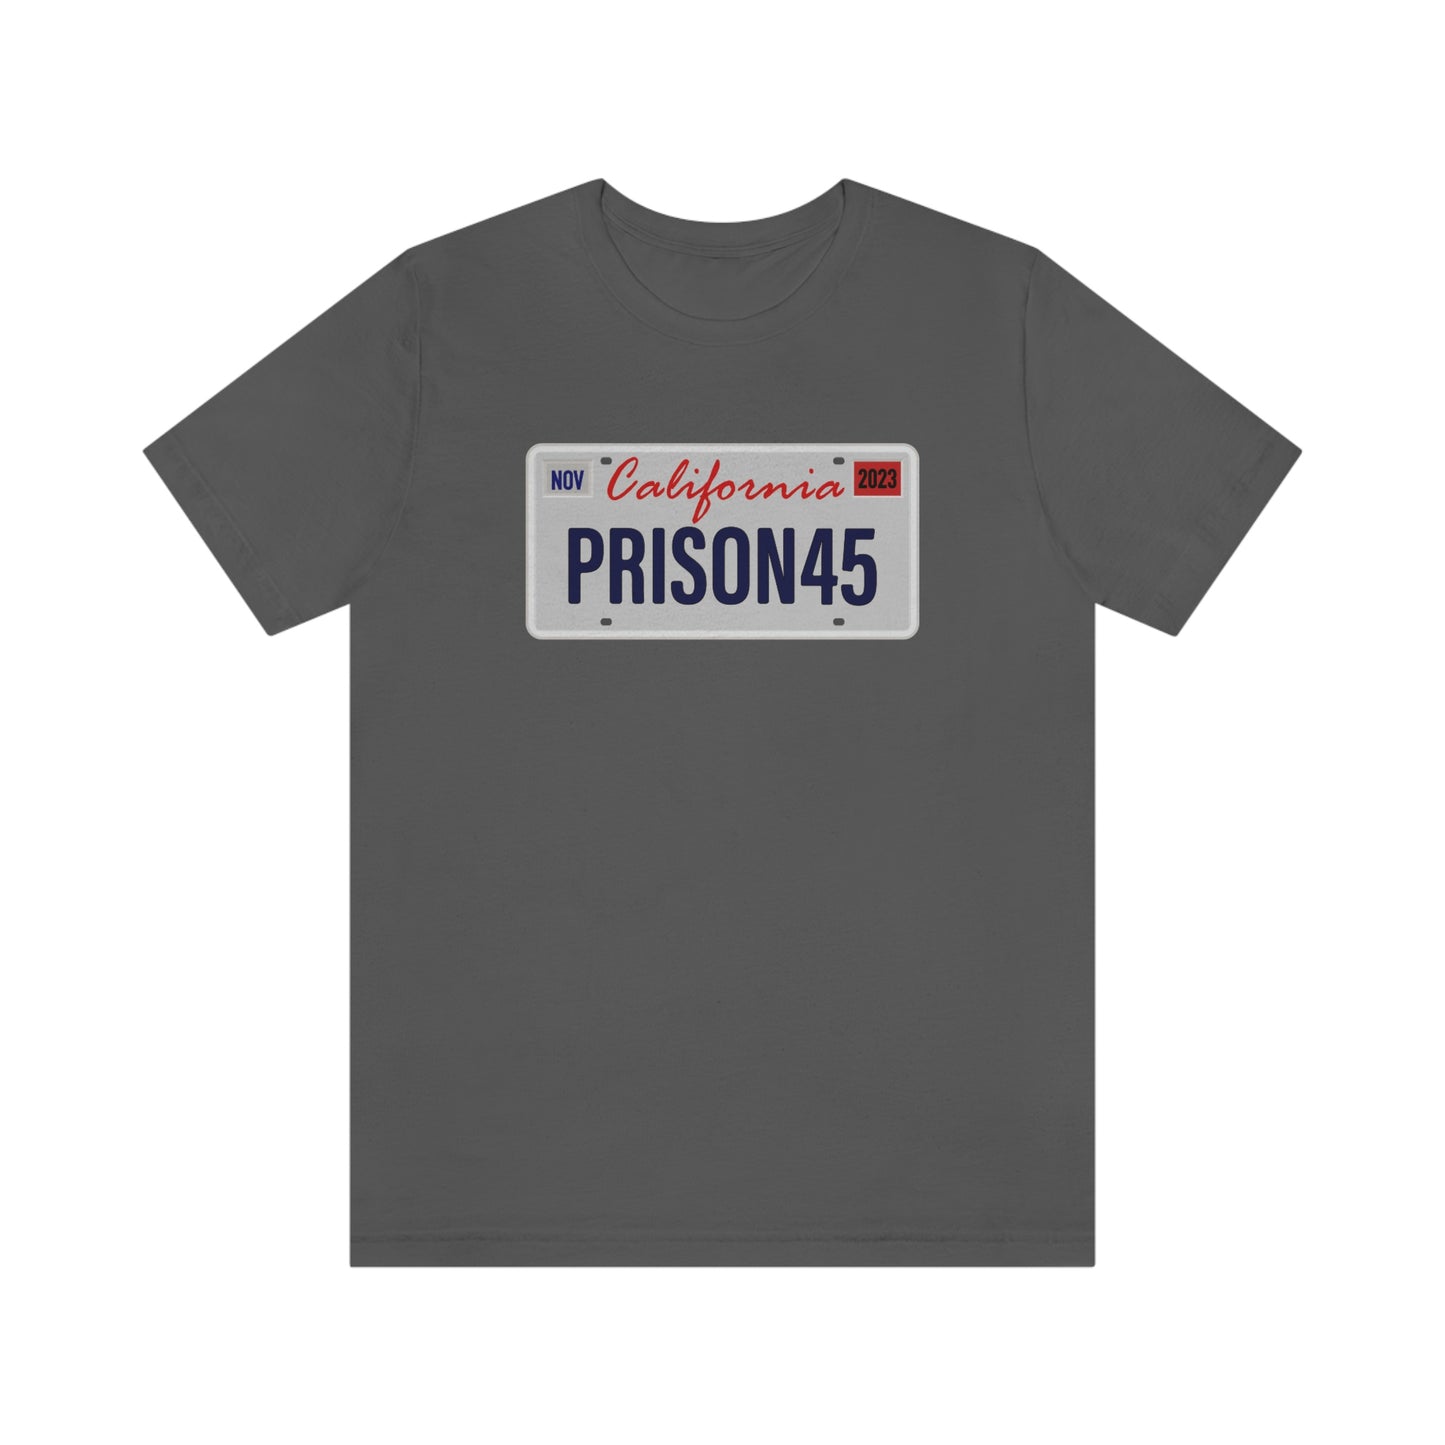 Prison 45 California Plate - Unisex T-Shirt